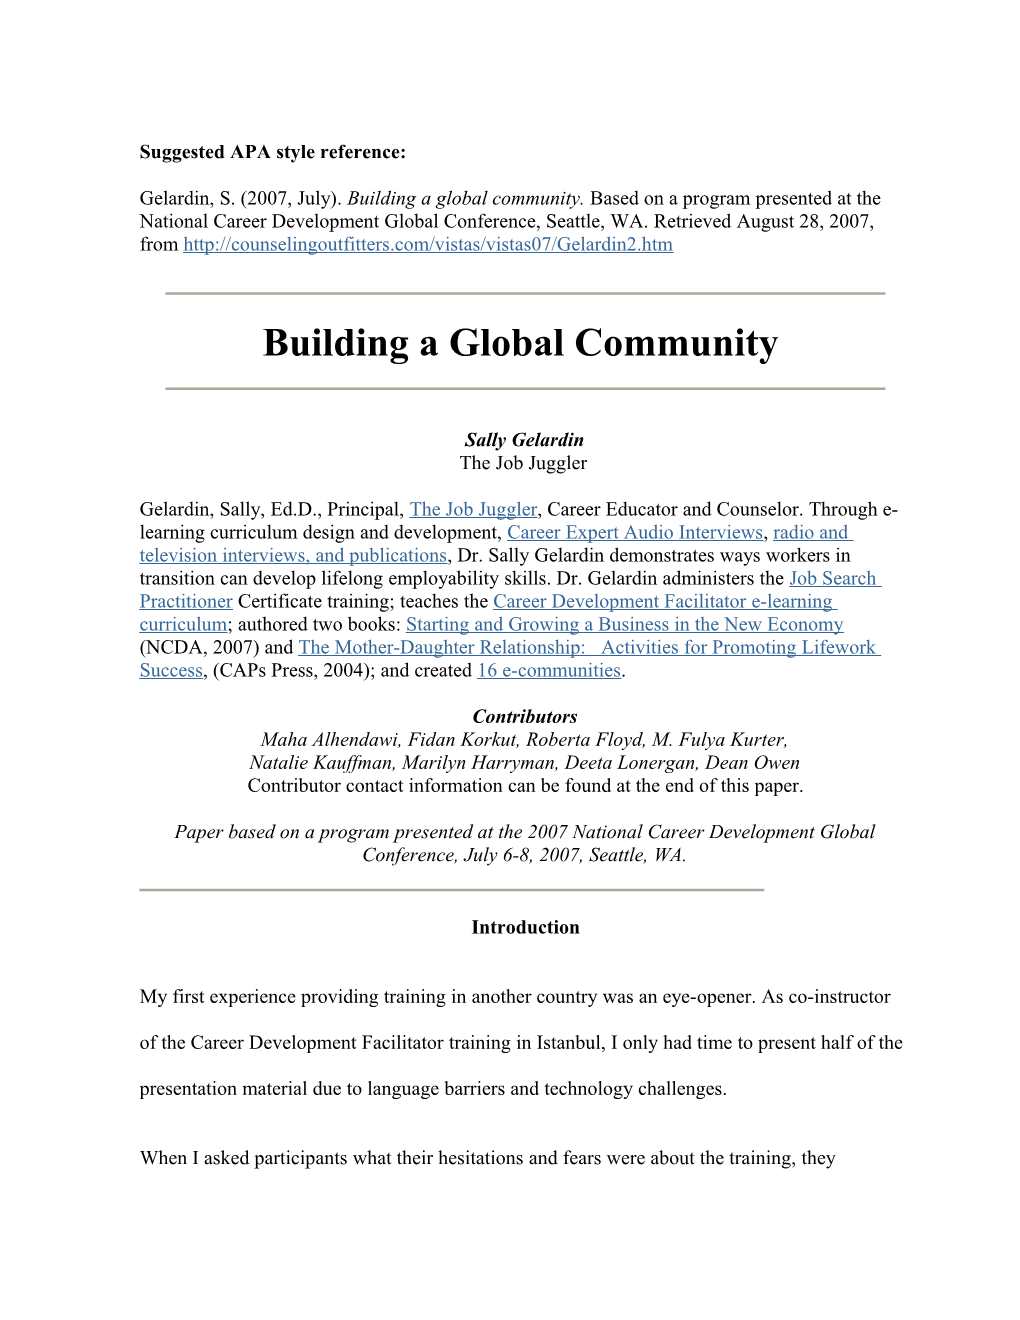 Building a Global Community